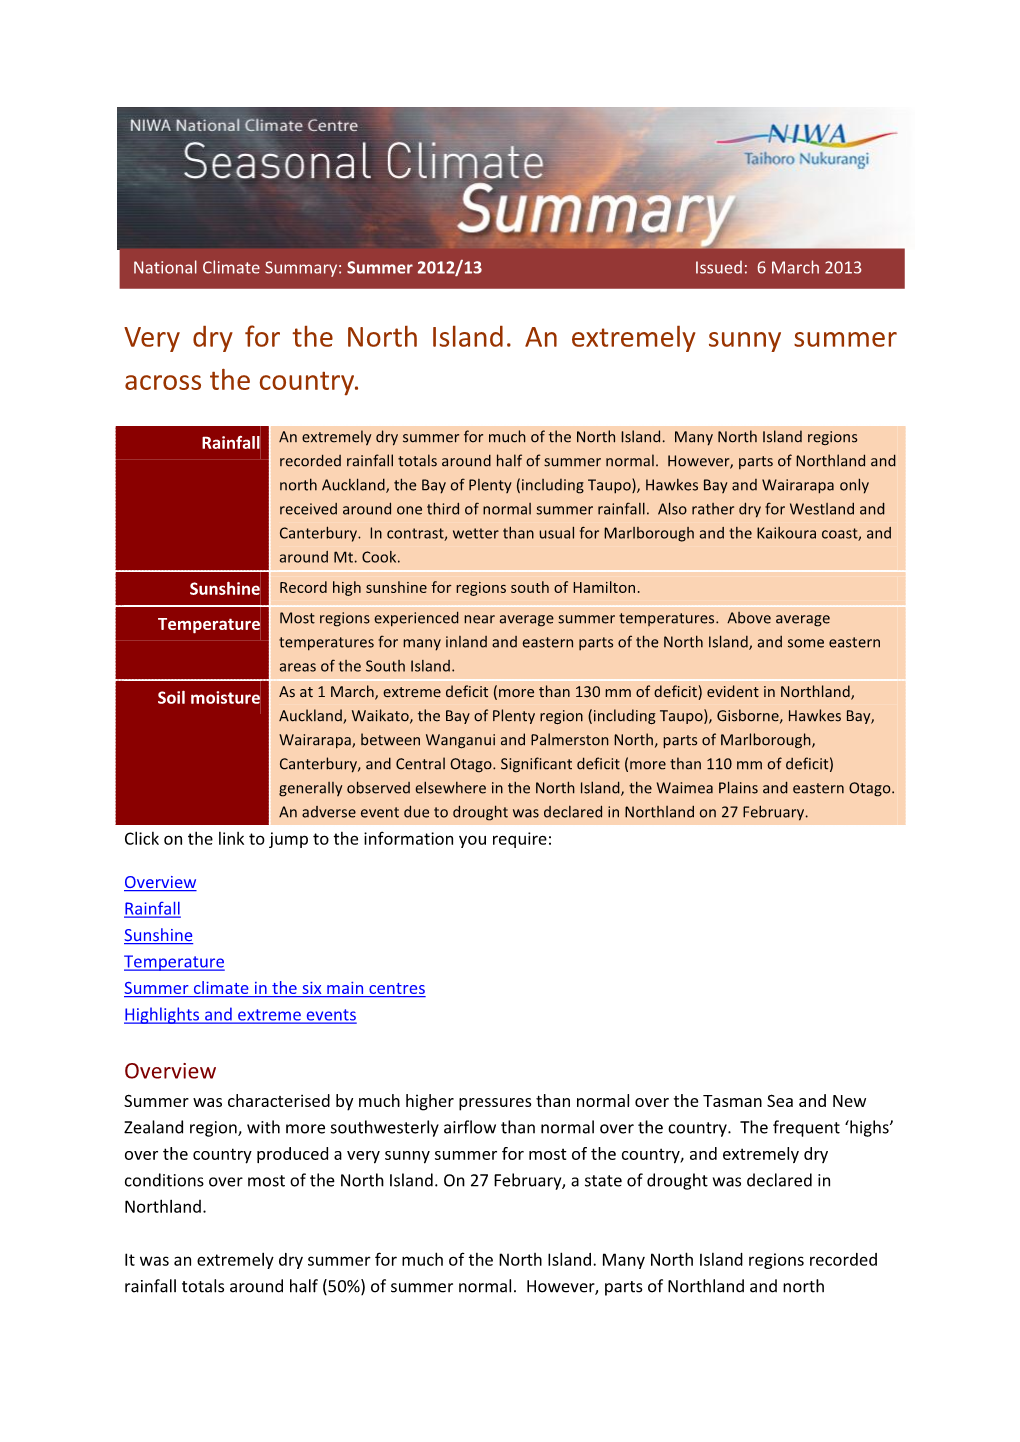 Summer 2012-13 Climate Summary